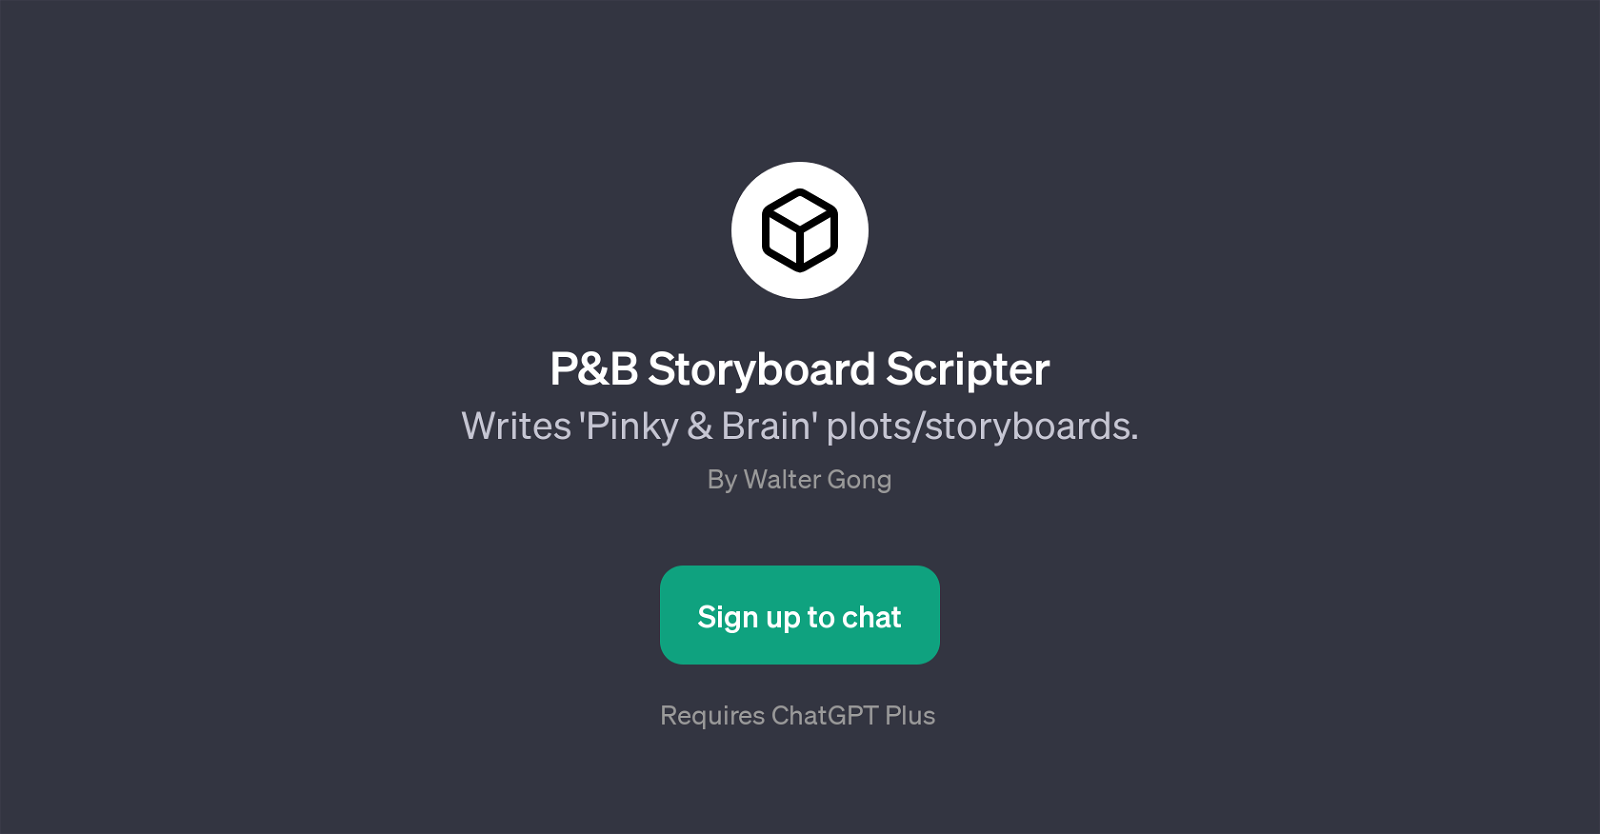 P&B Storyboard Scripter website